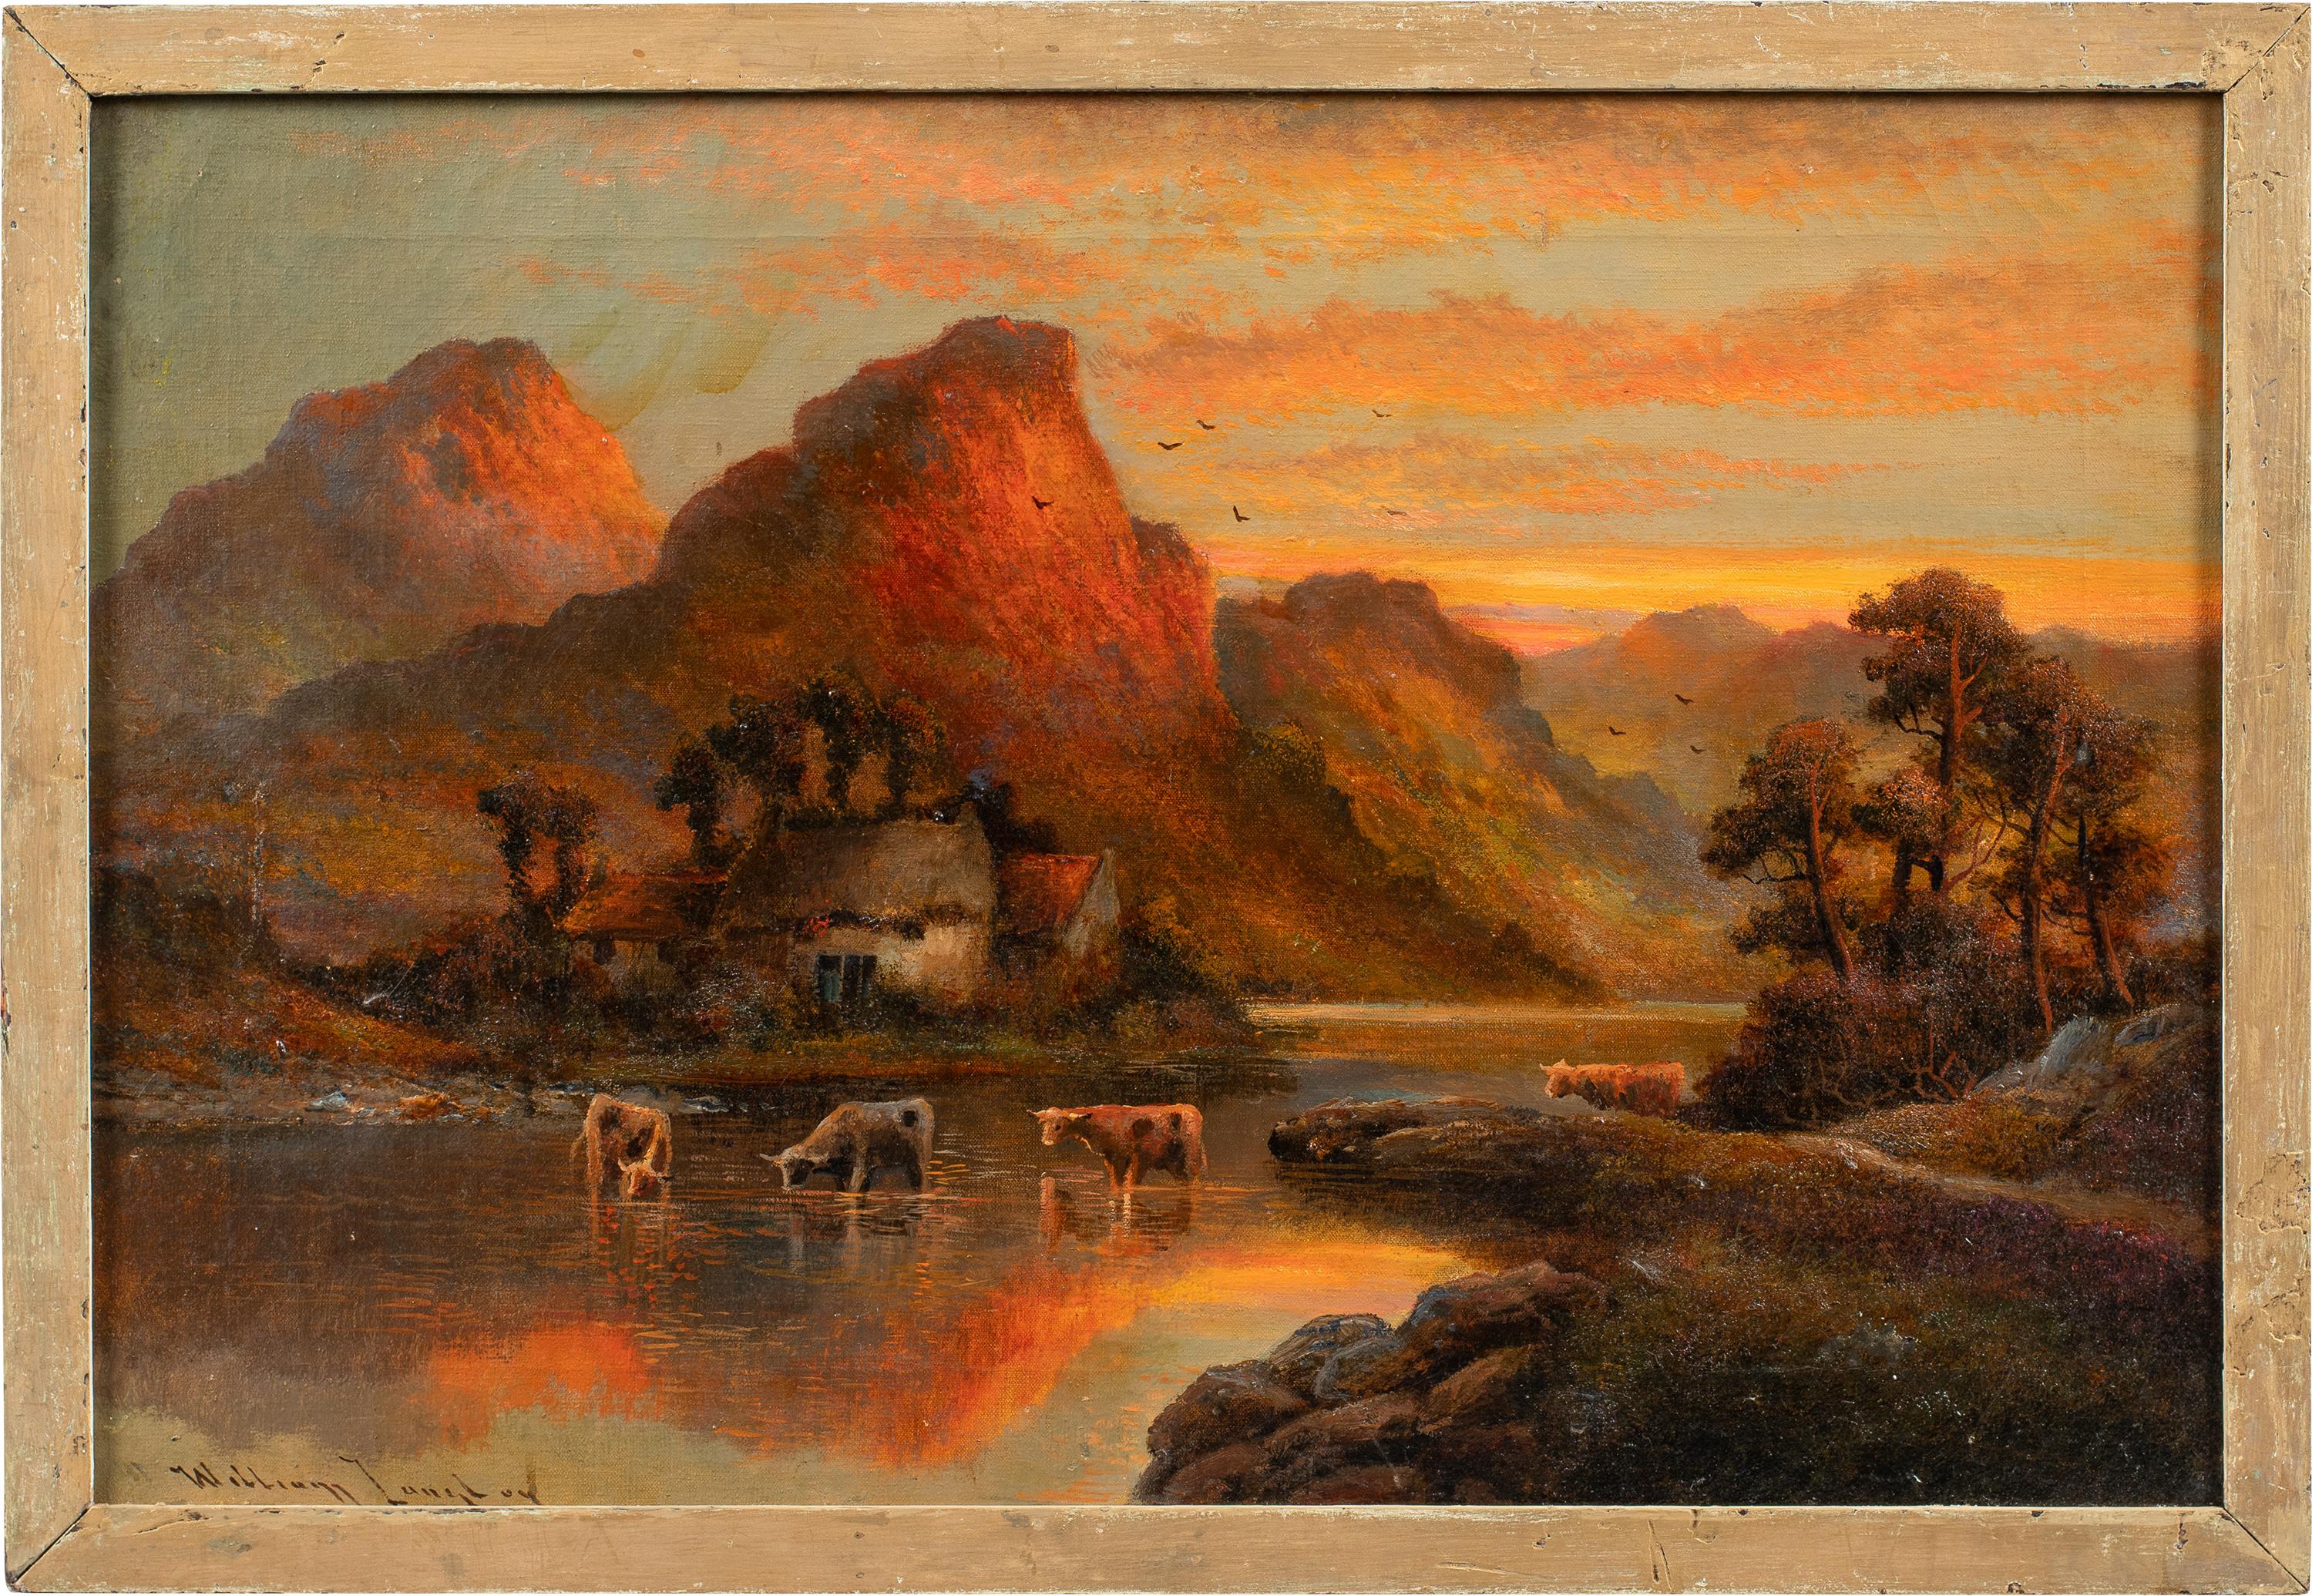 Unknown Figurative Painting - William Langton(British painter) - 19th century landscape painting - Sunset Lake